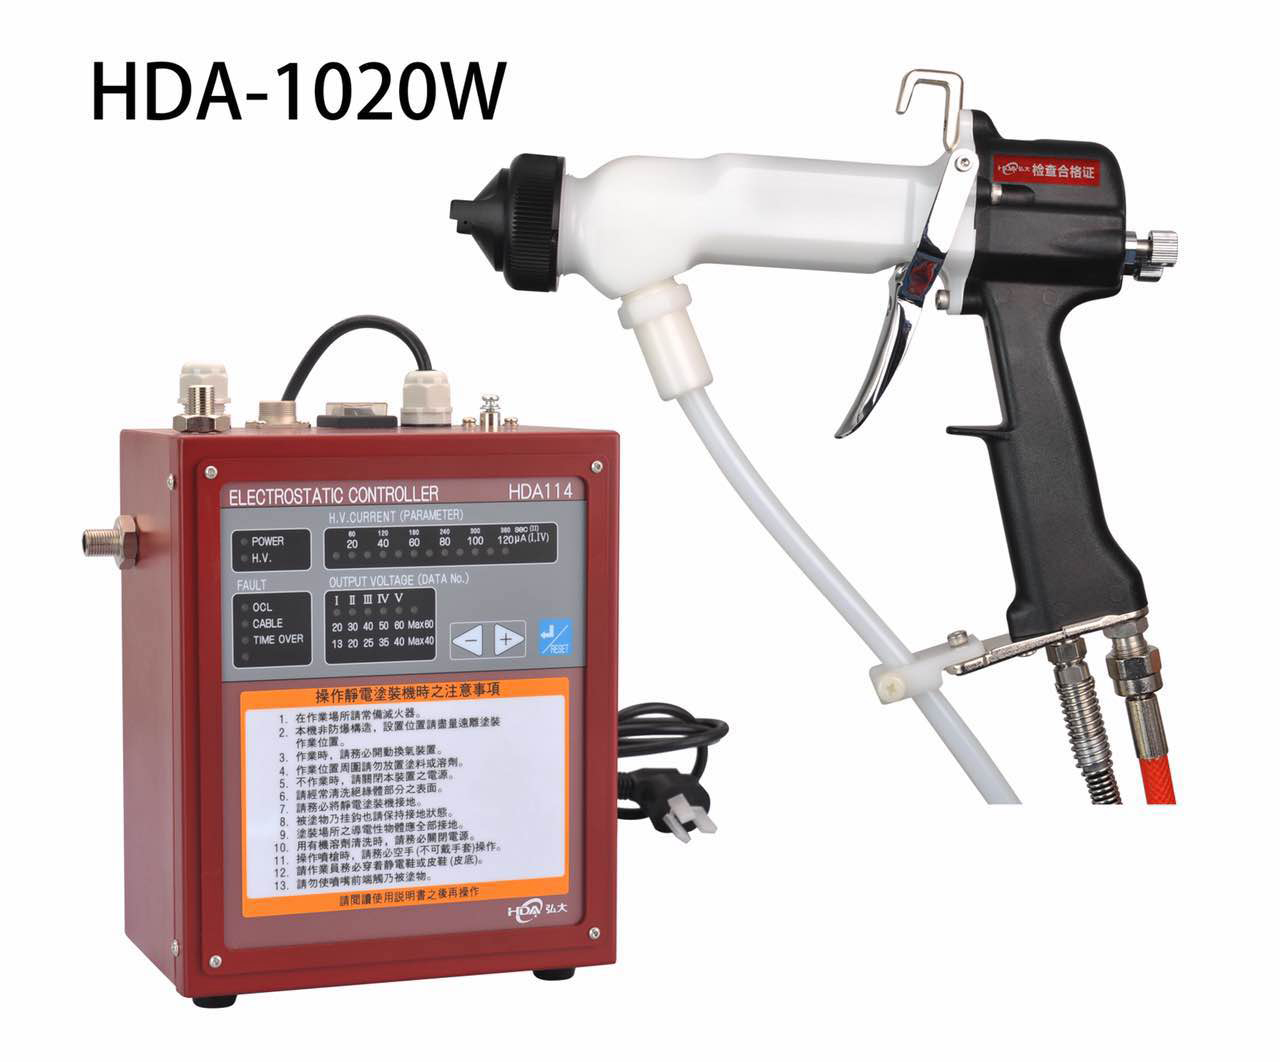 HDA electrostatic liquid paint spray gun | www.hdaspraygun.com